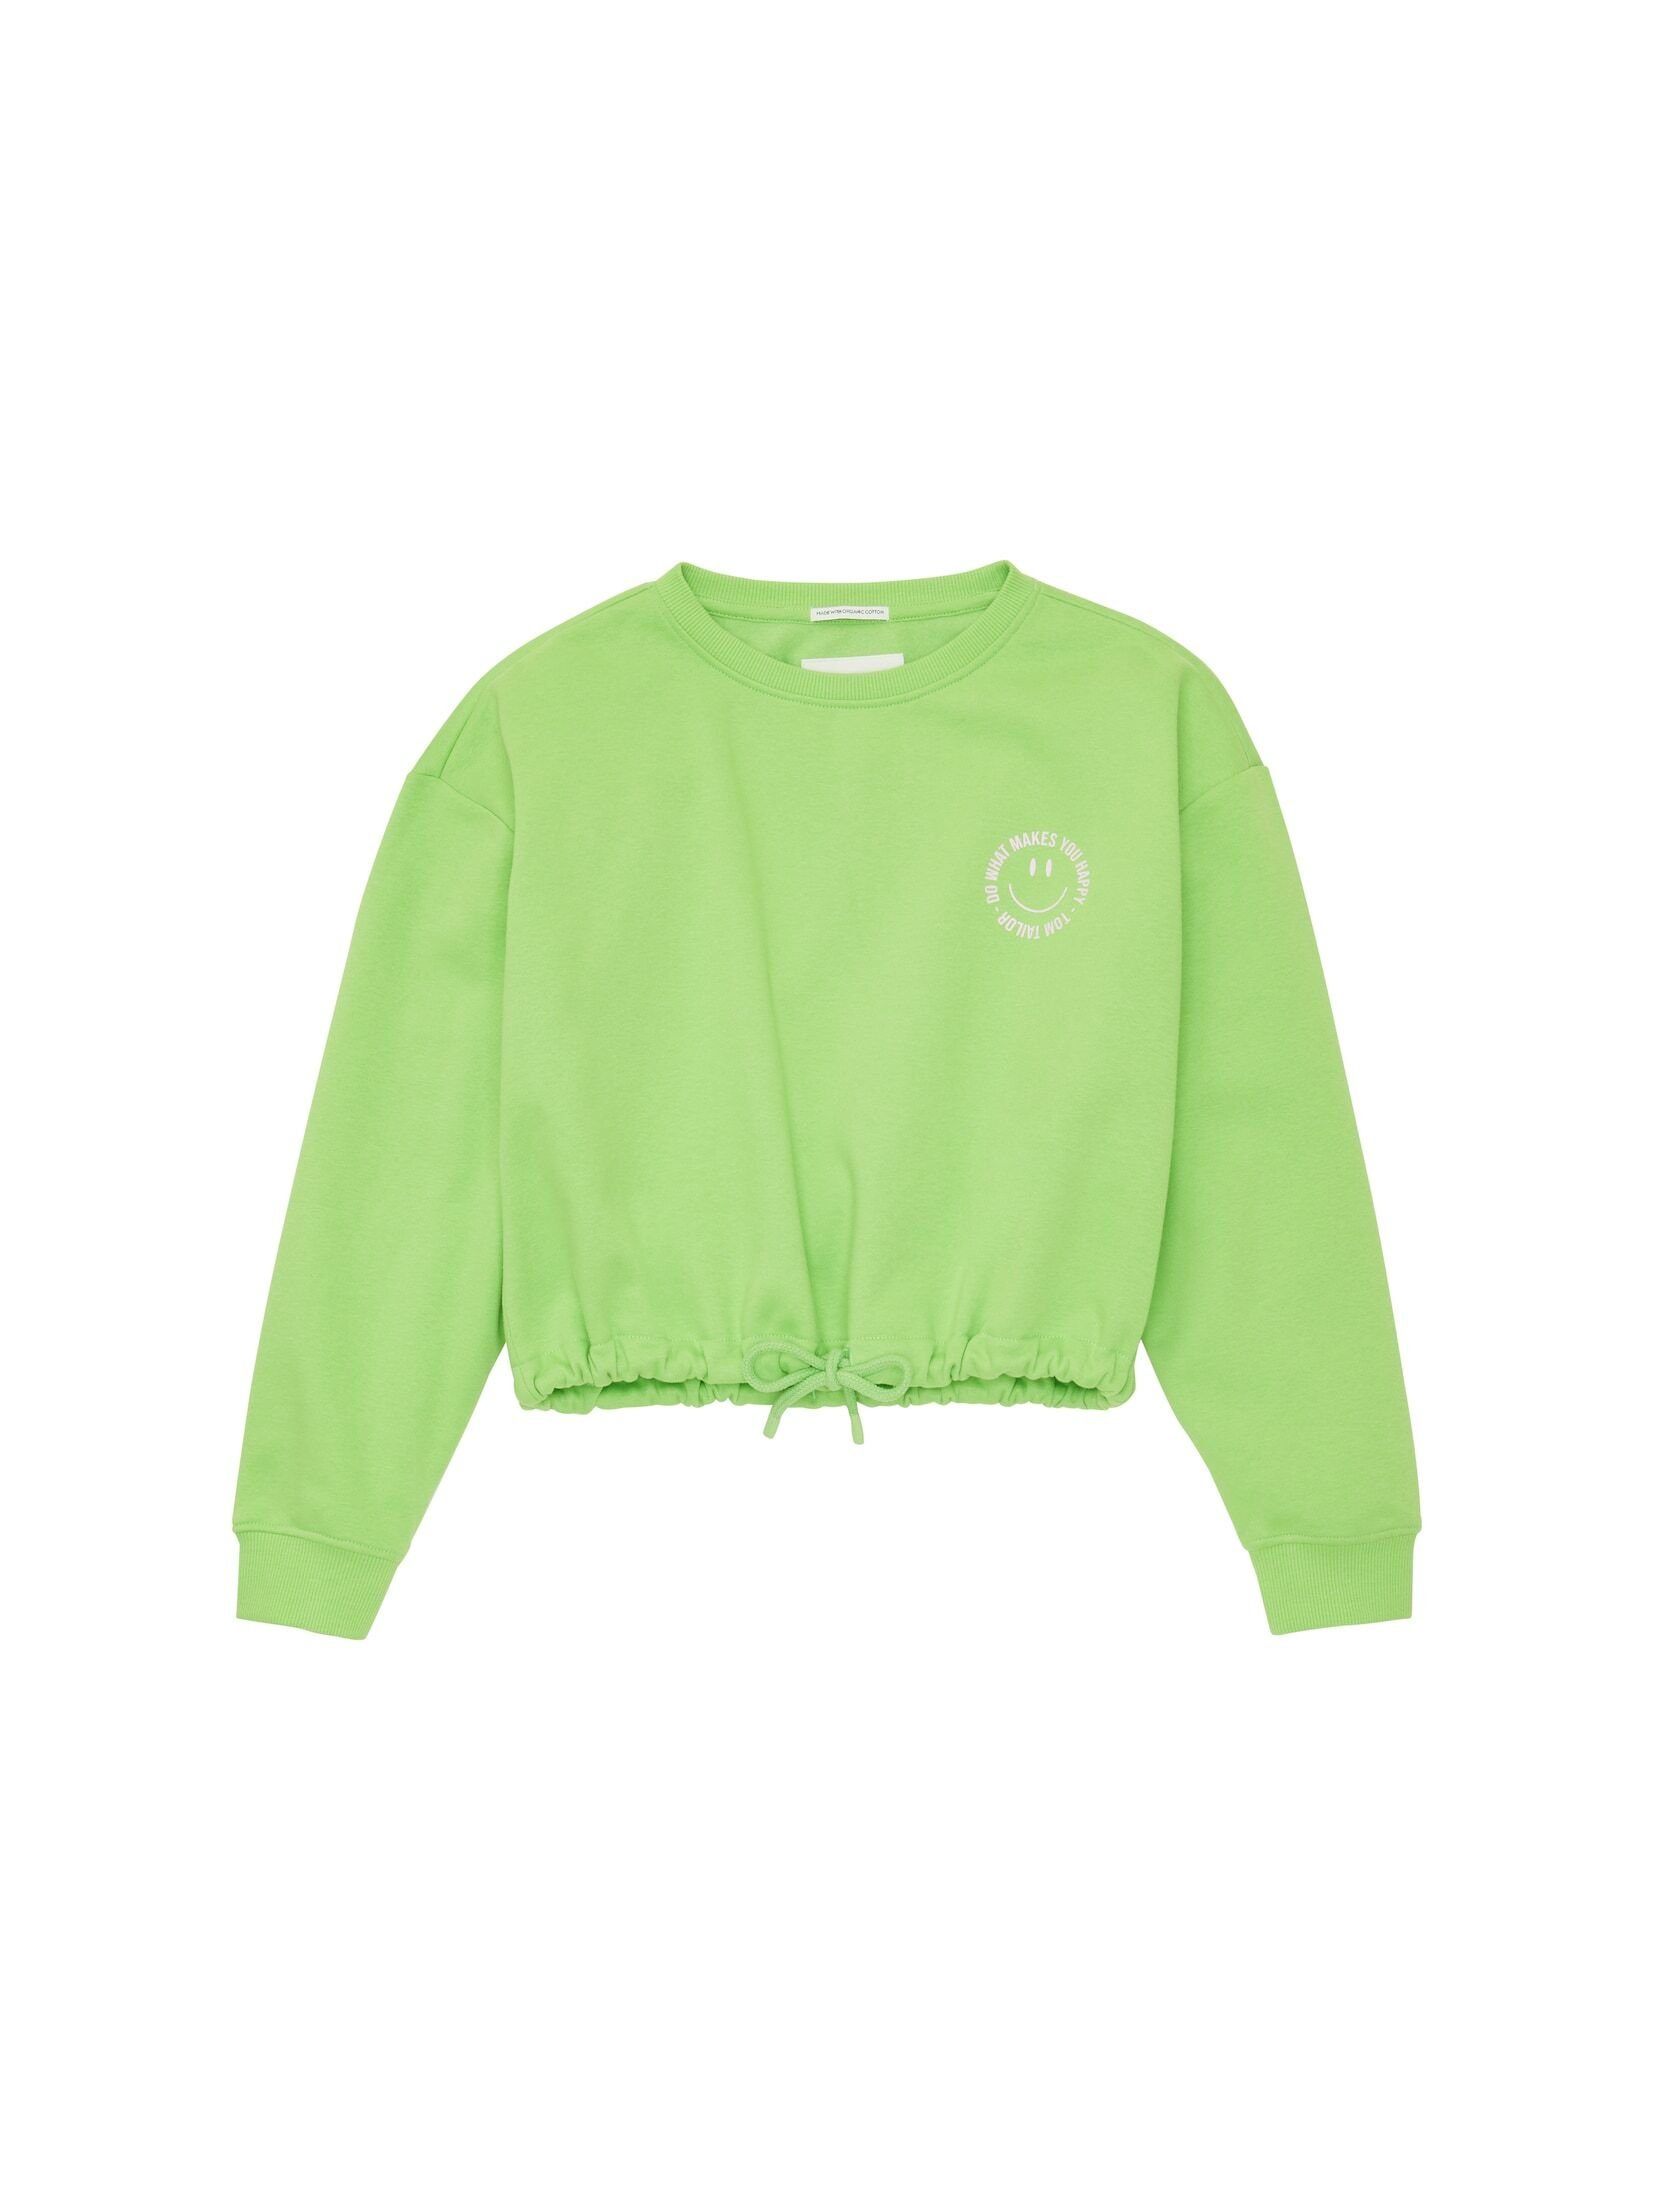 TOM TAILOR Sweatjacke Cropped Sweatshirt mit Print liquid lime green